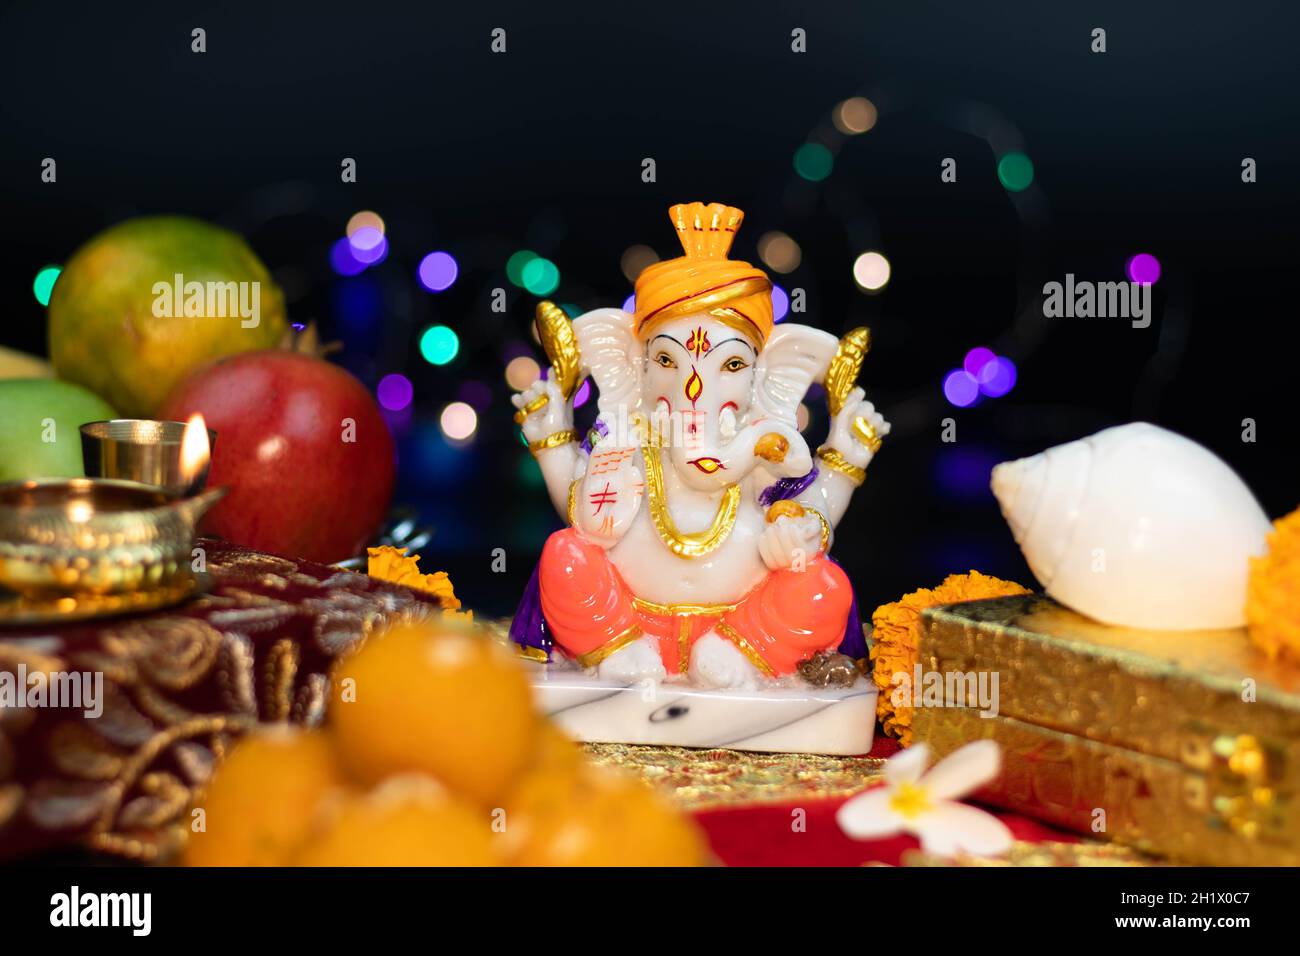 Closeup Of Hindu God Ganesha Ganpati Bappa Morya In Sitting Pose On A  Colorful Bokeh Effect Black Background. For Prayers On Diwali Puja New Year  Deep Stock Photo - Alamy